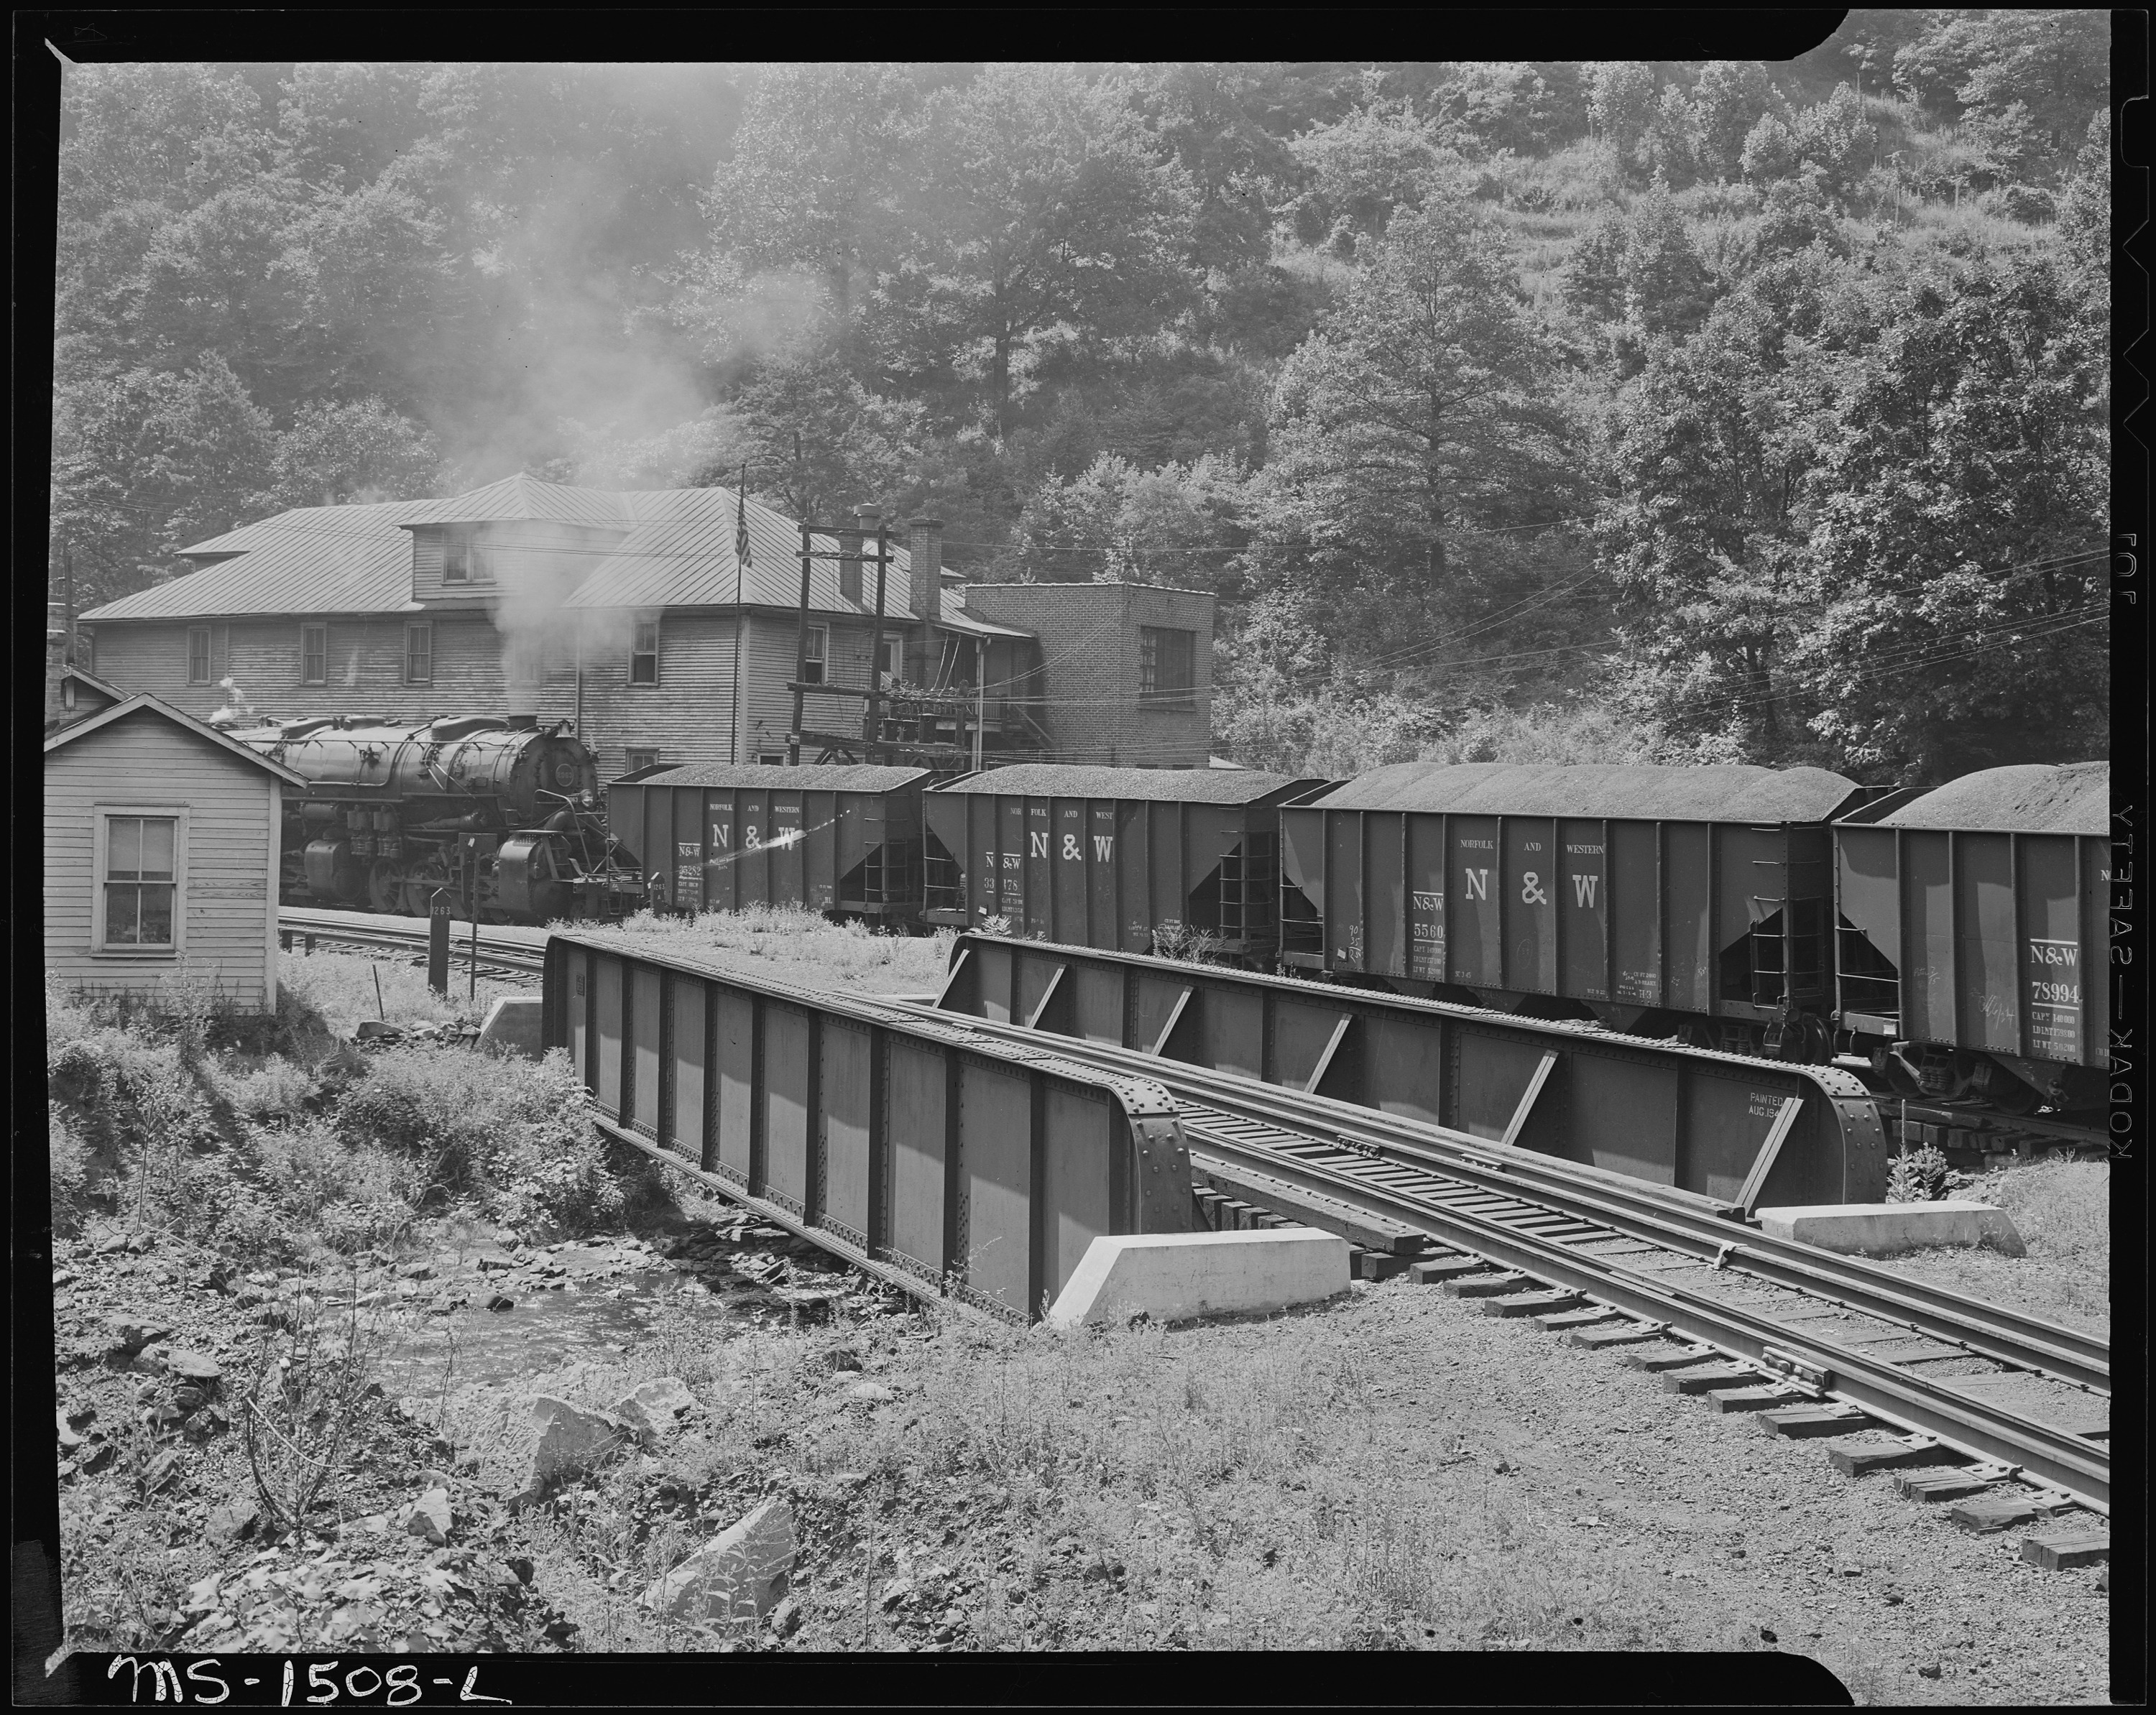 File:Coal cars near the company store. Gilliam Coal and Coke Co, Gilliam Mine, Gilliam, McDowell County, West Virginia. - NARA - 540828.jpg - Wikimedia Commons